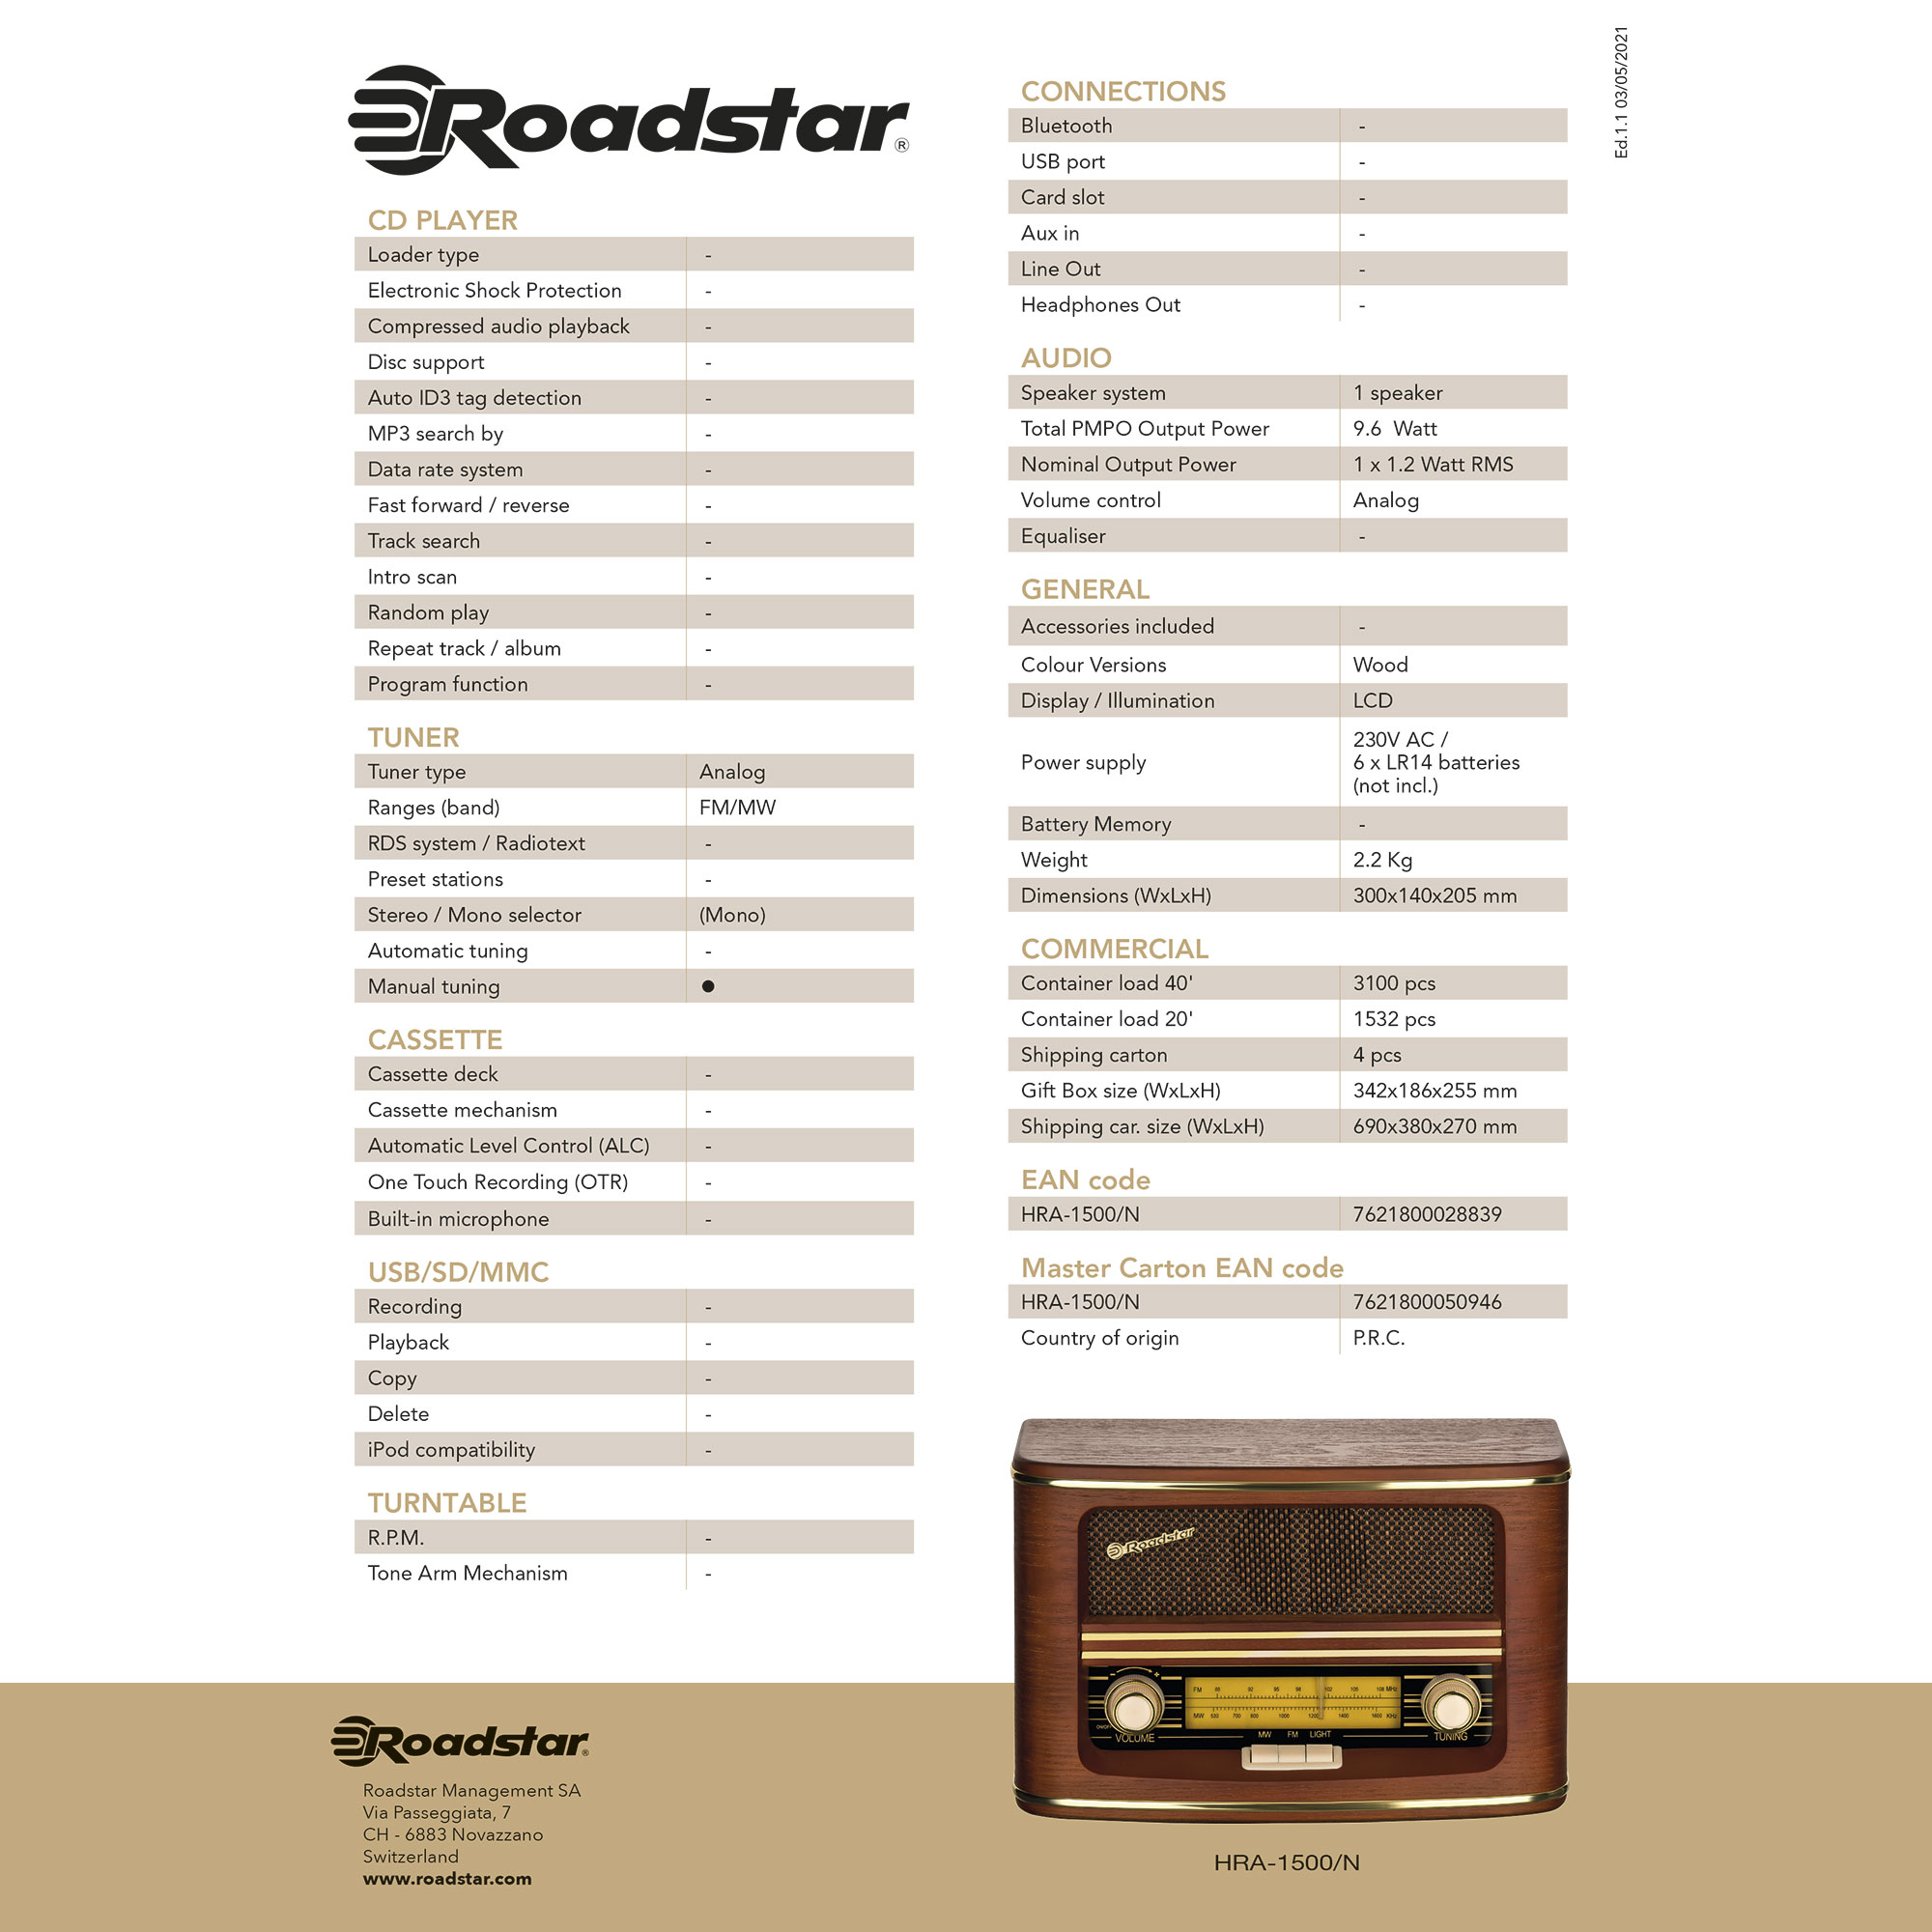 Radio HRA-1500N Analog, Retro CD, ROADSTAR FM/ Vintage Holz MW FM, Vintage